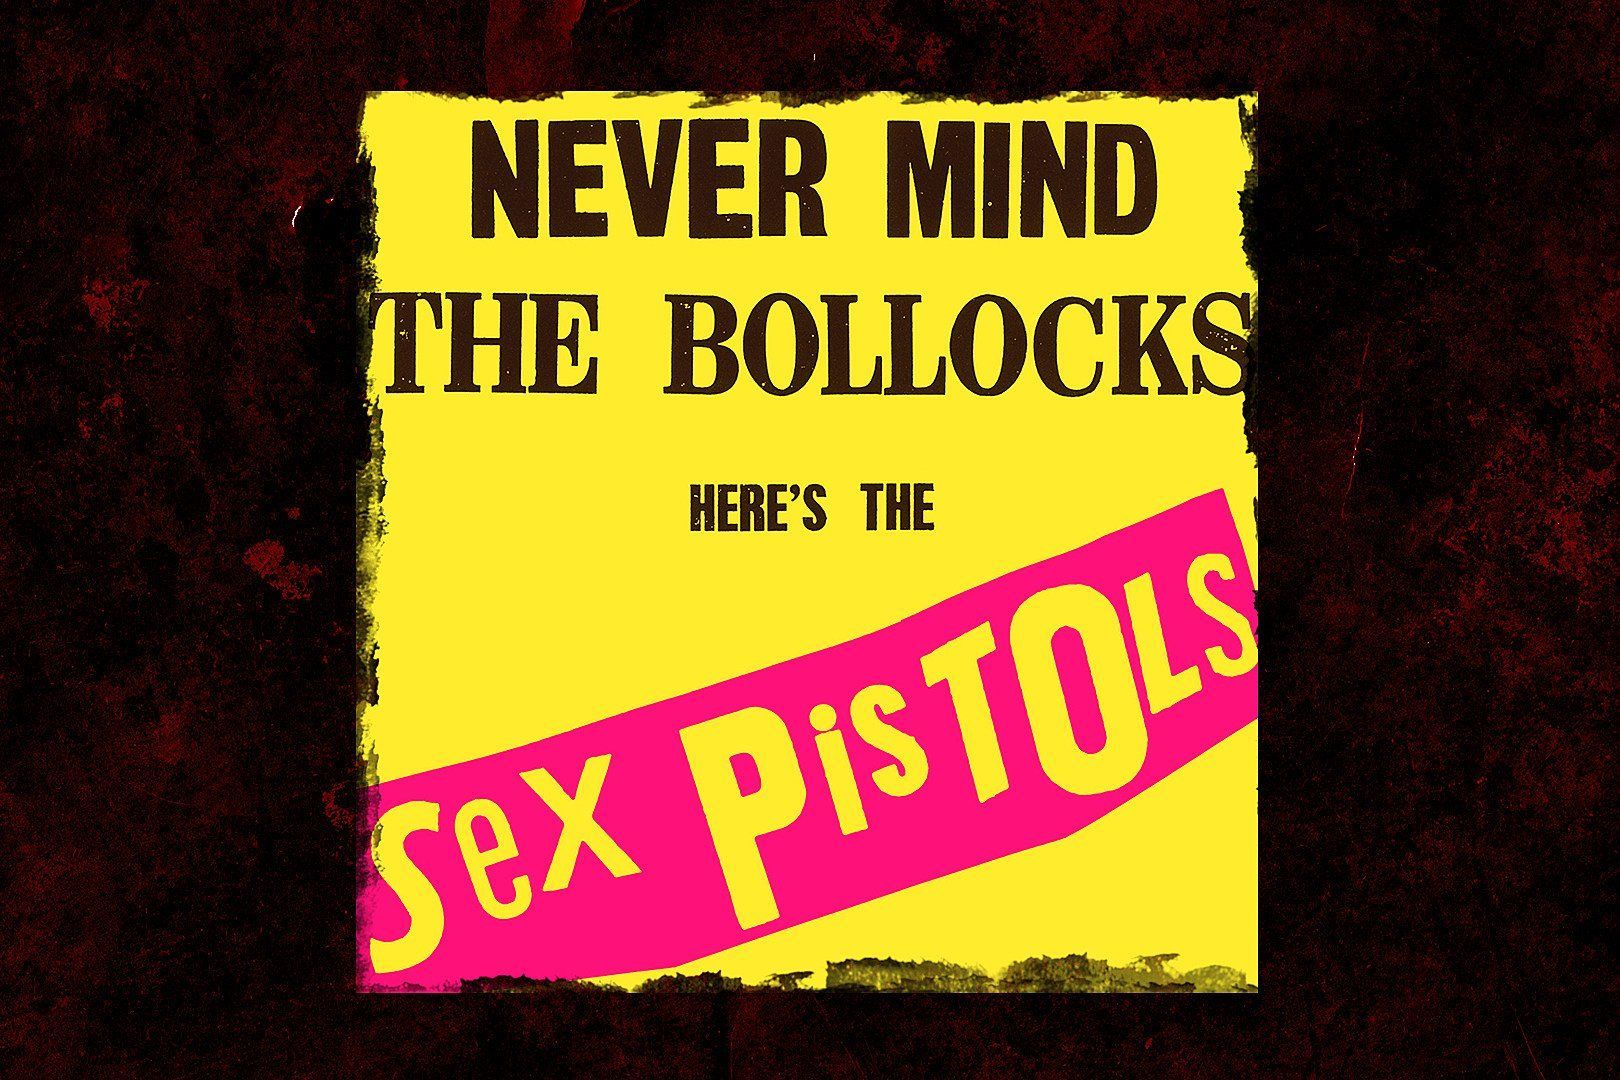 Sex pistols never mind the bollocks